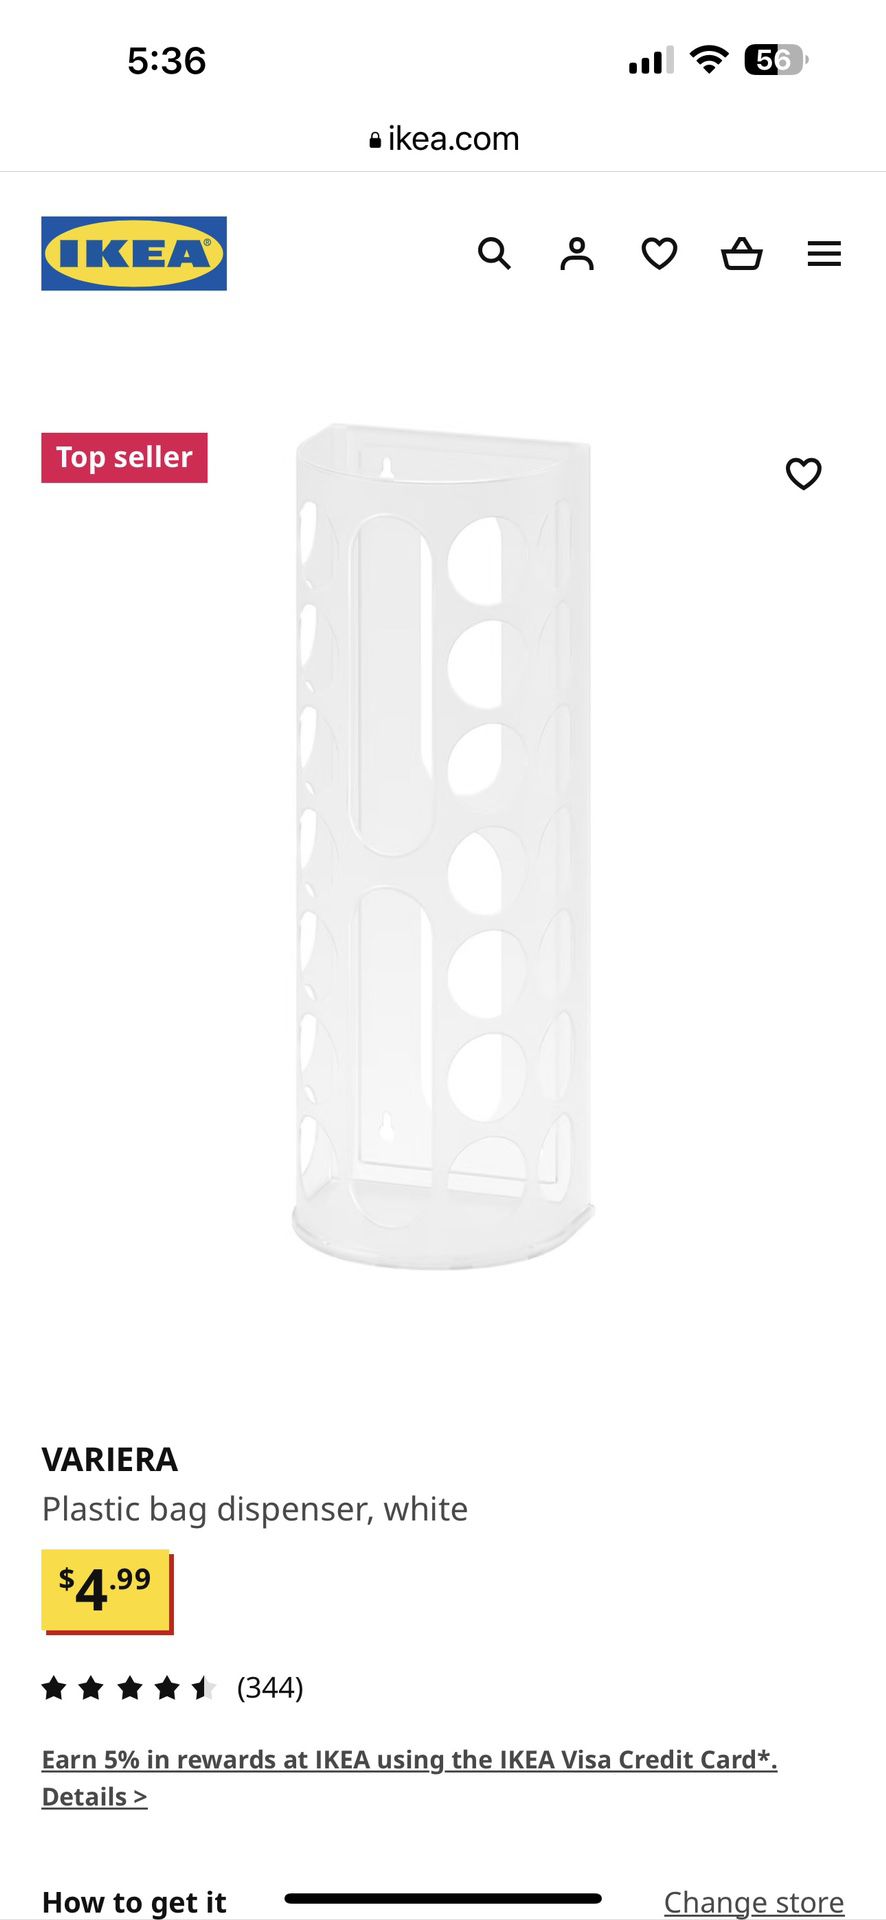 VARIERA plastic bag dispenser, white - IKEA